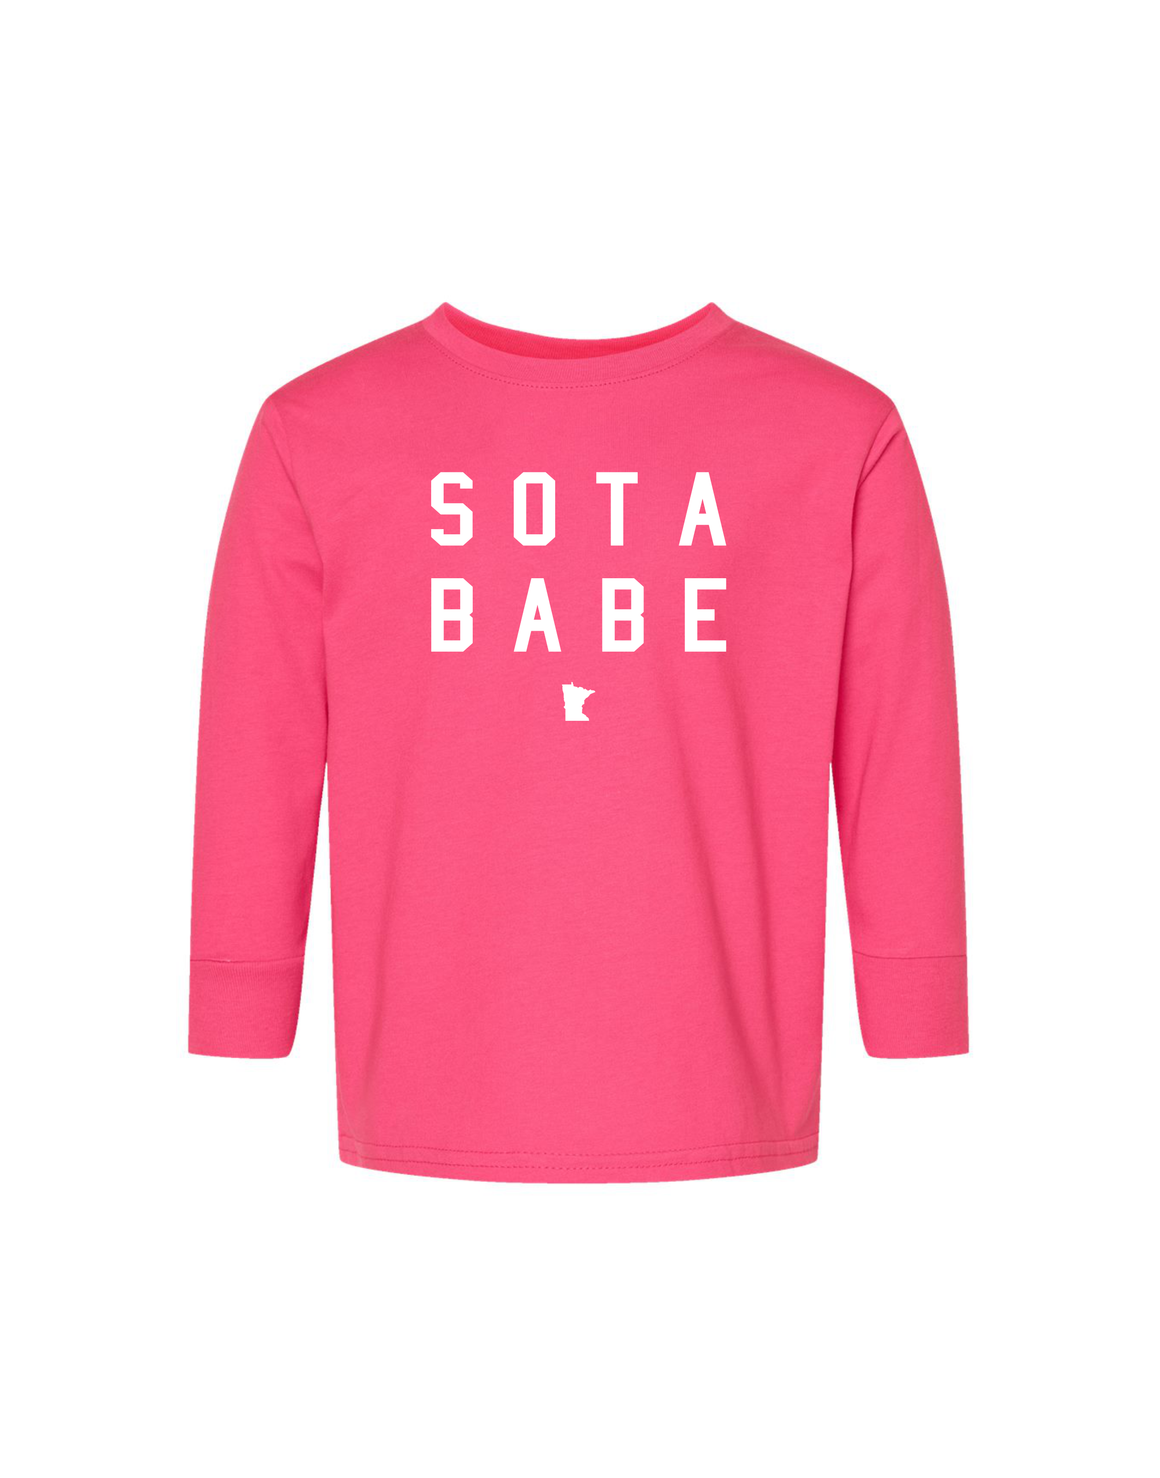 Toddler SOTA BABE Long Sleeve [pink] - Northern Print Co.